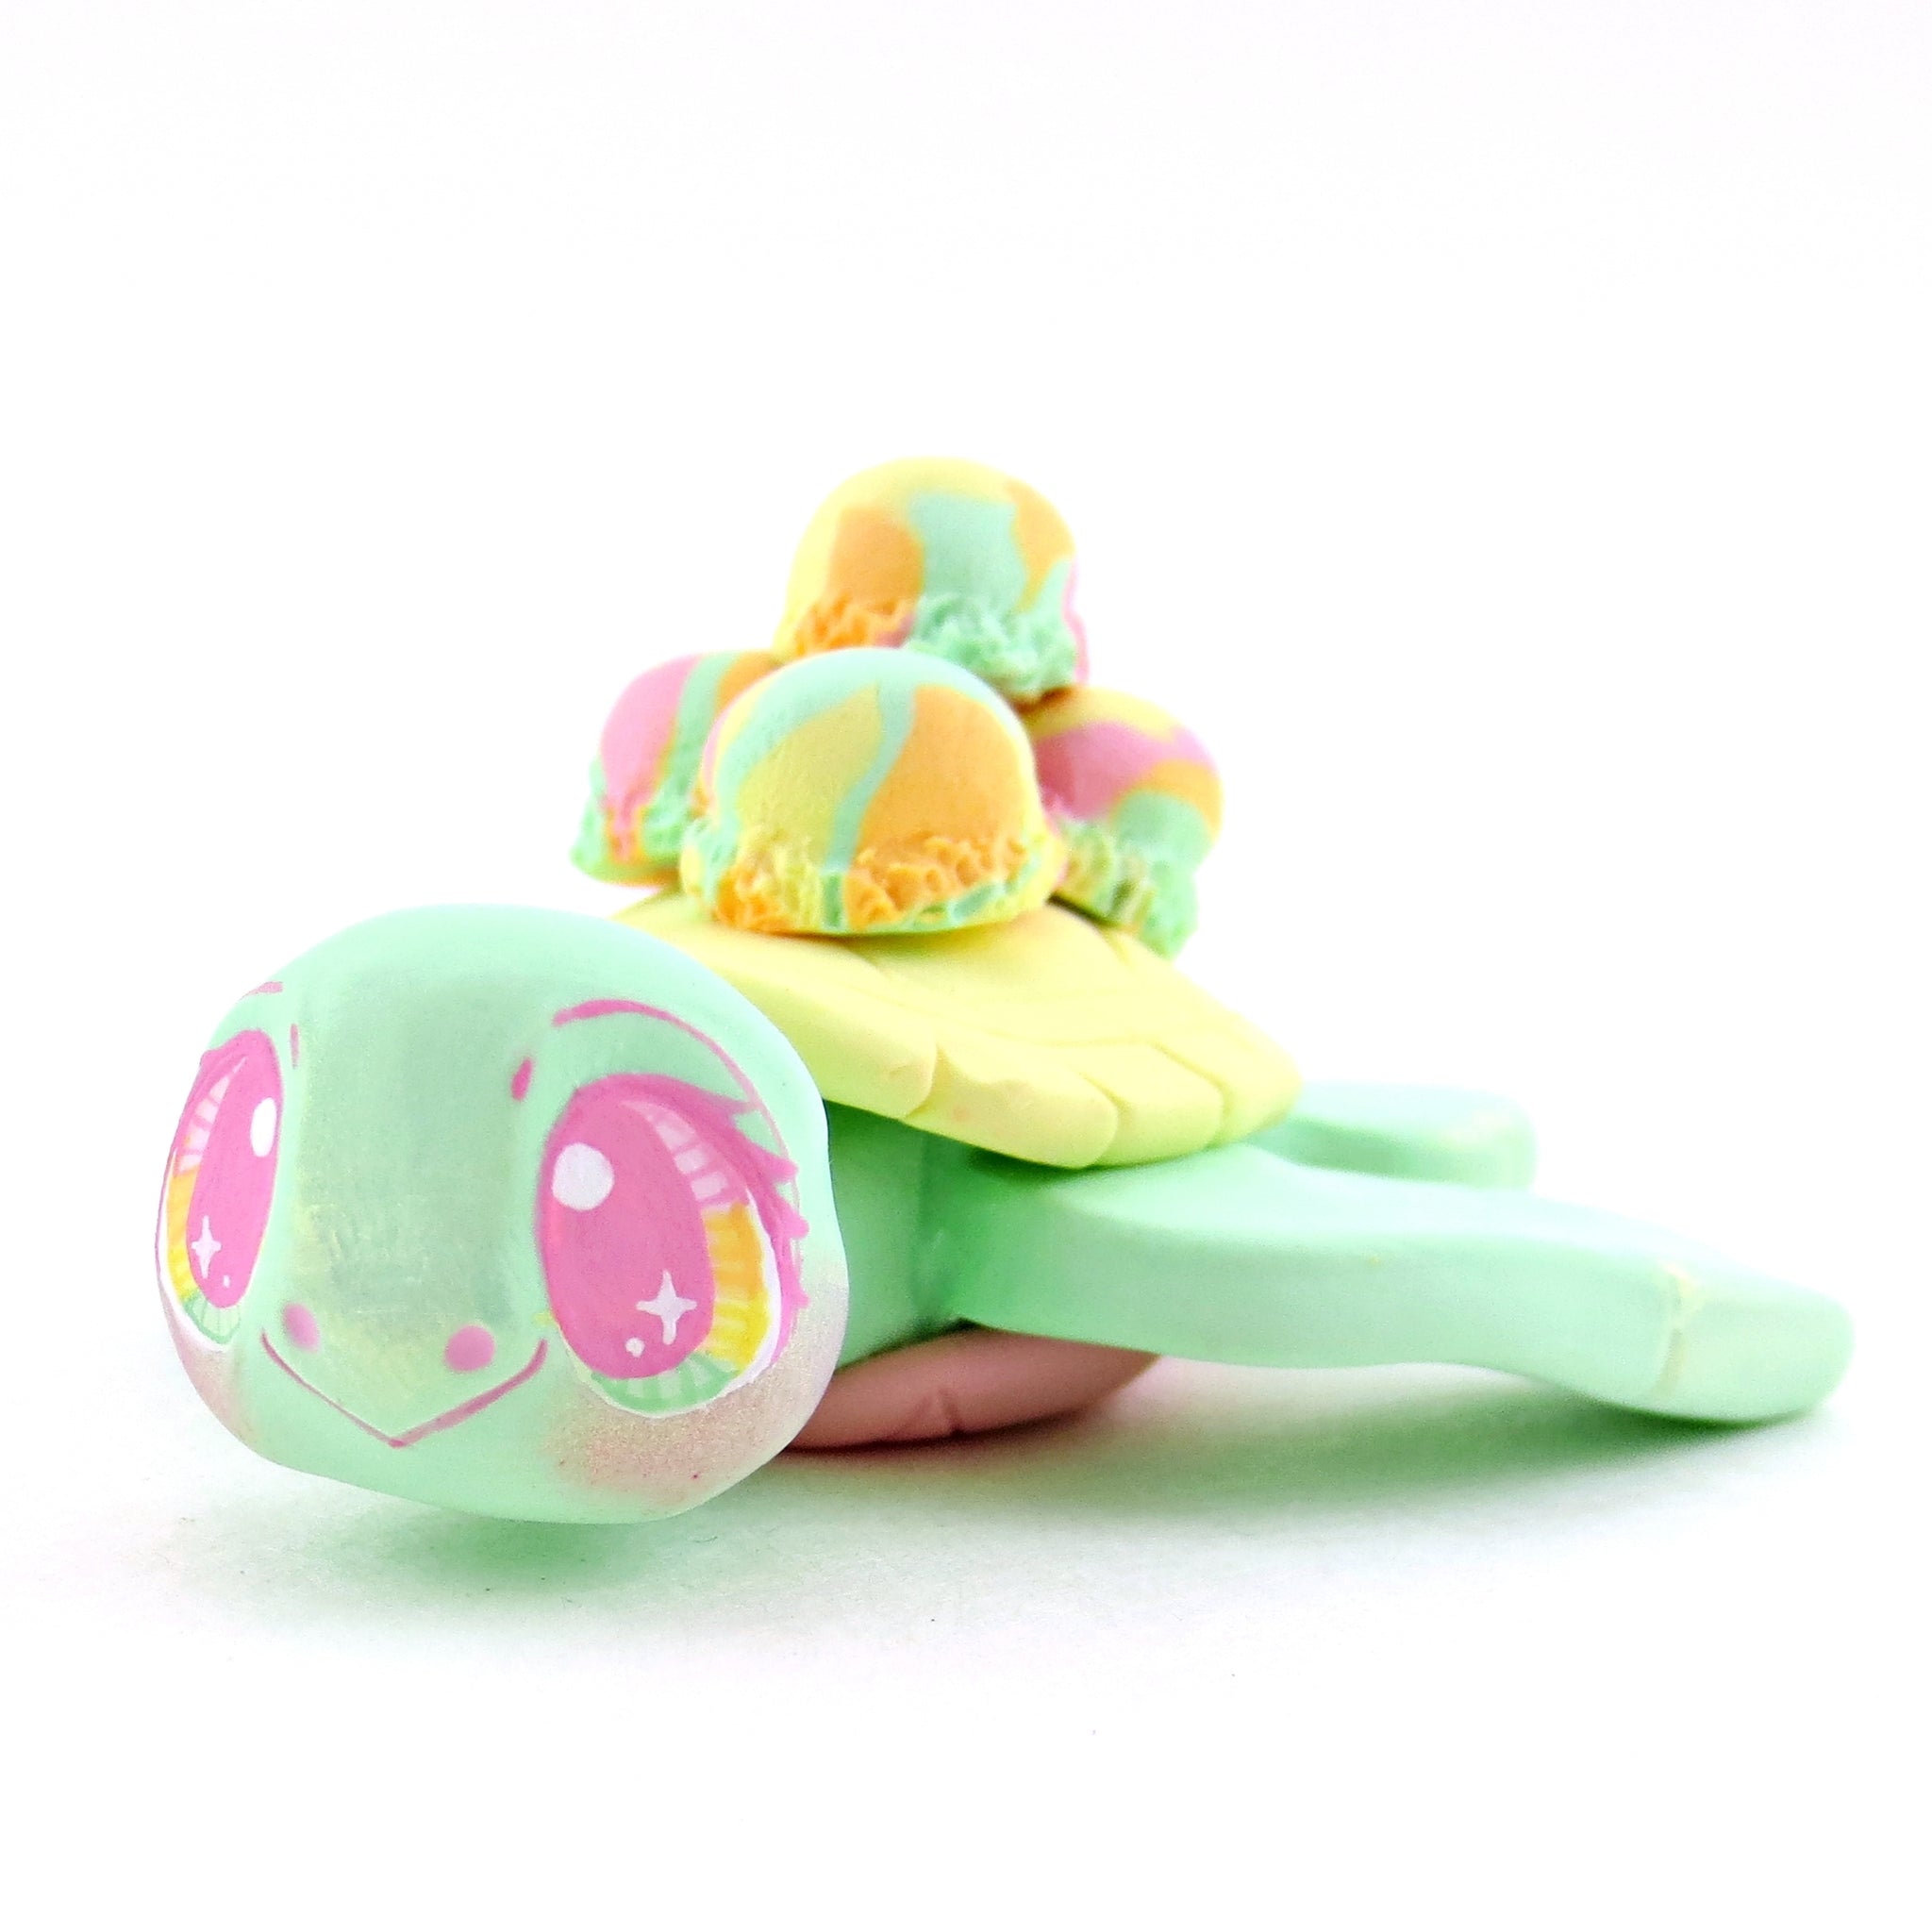 Rainbow Sherbet Ice Cream Turtle Figurine - Polymer Clay Ice Cream Animals